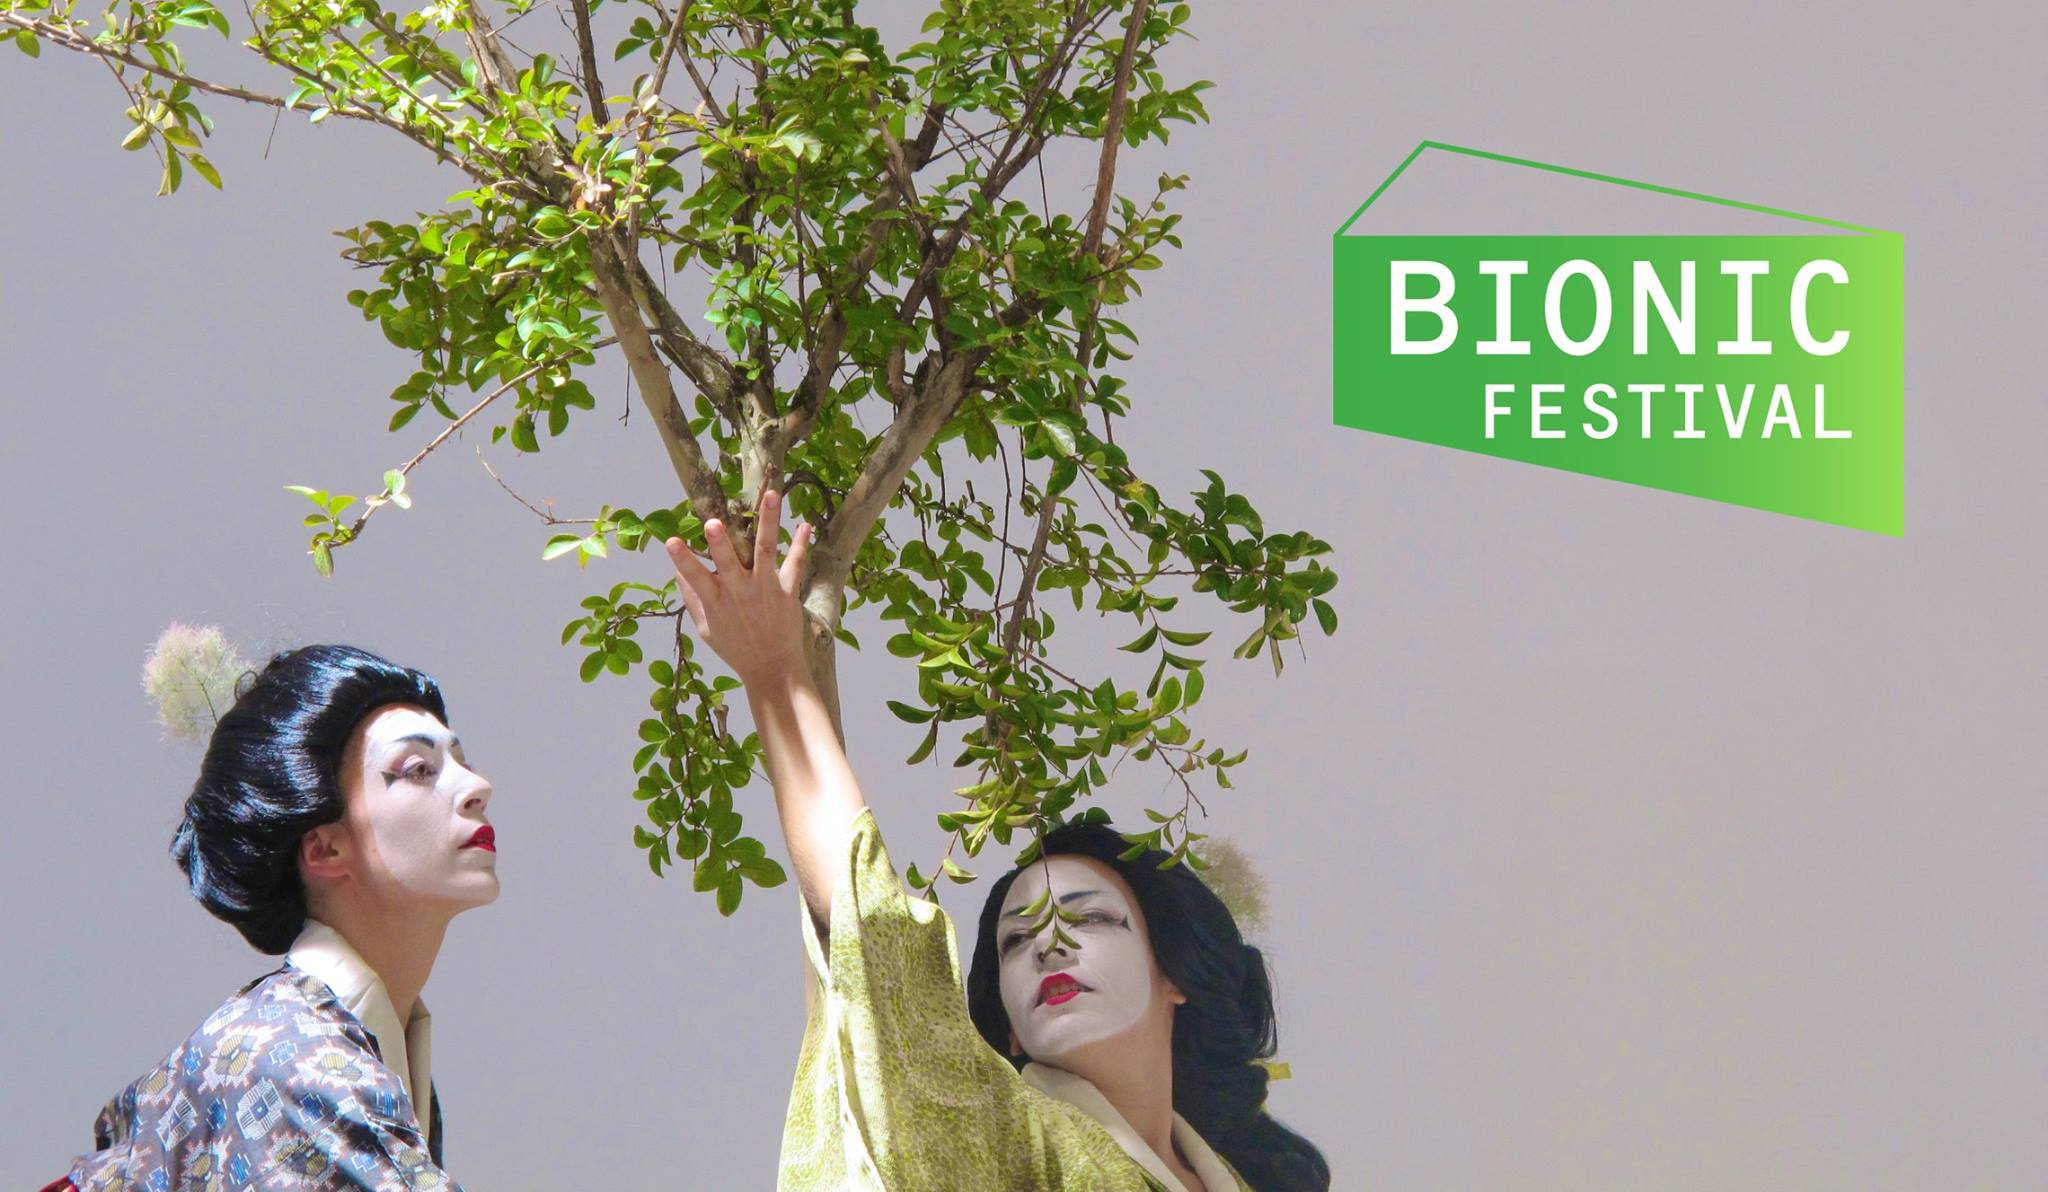 Danza bionica en el Bionic Festival 2017